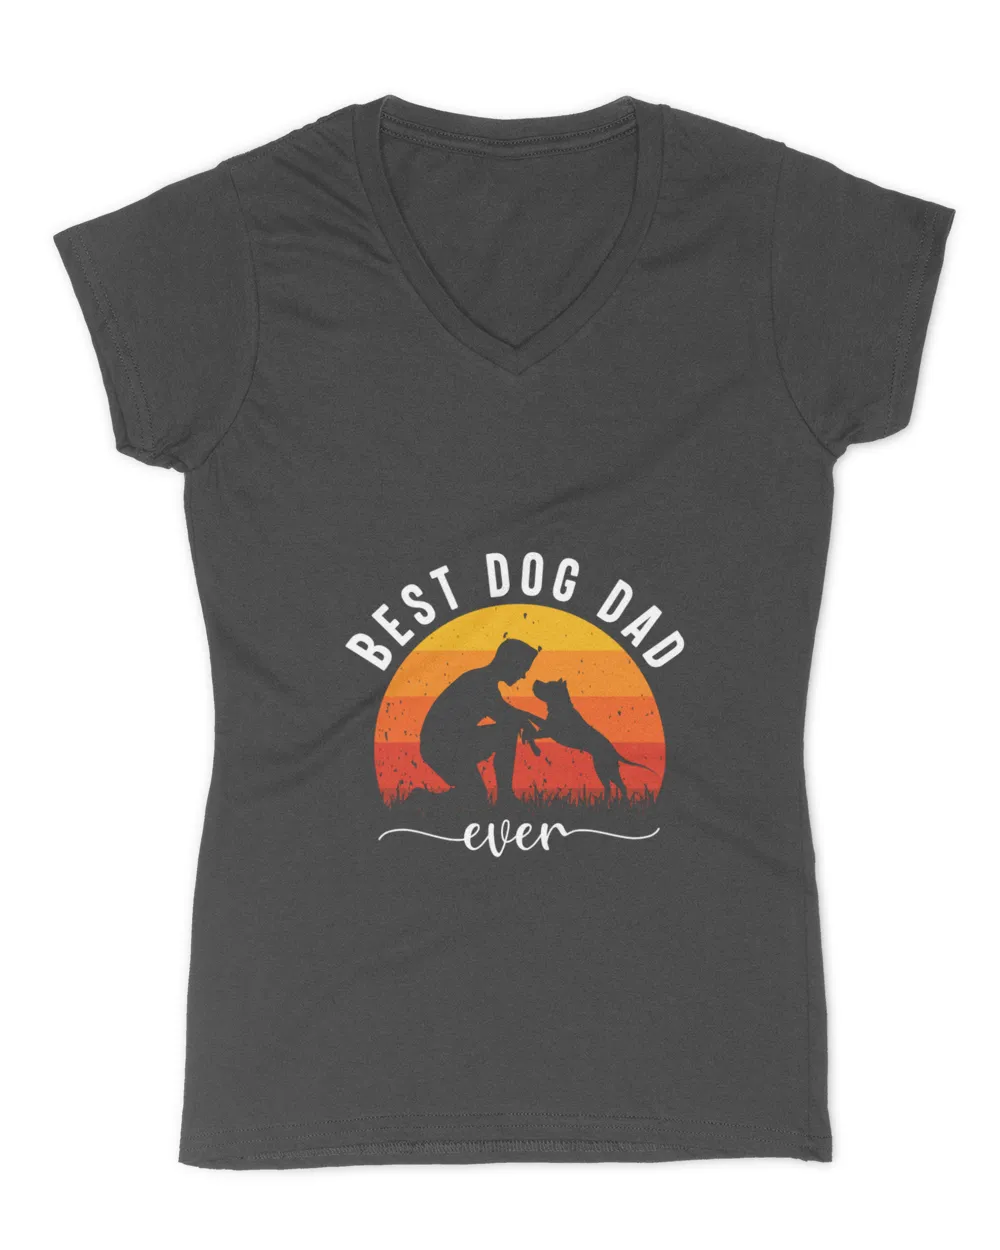 best dad ever t-shirt-custom-design